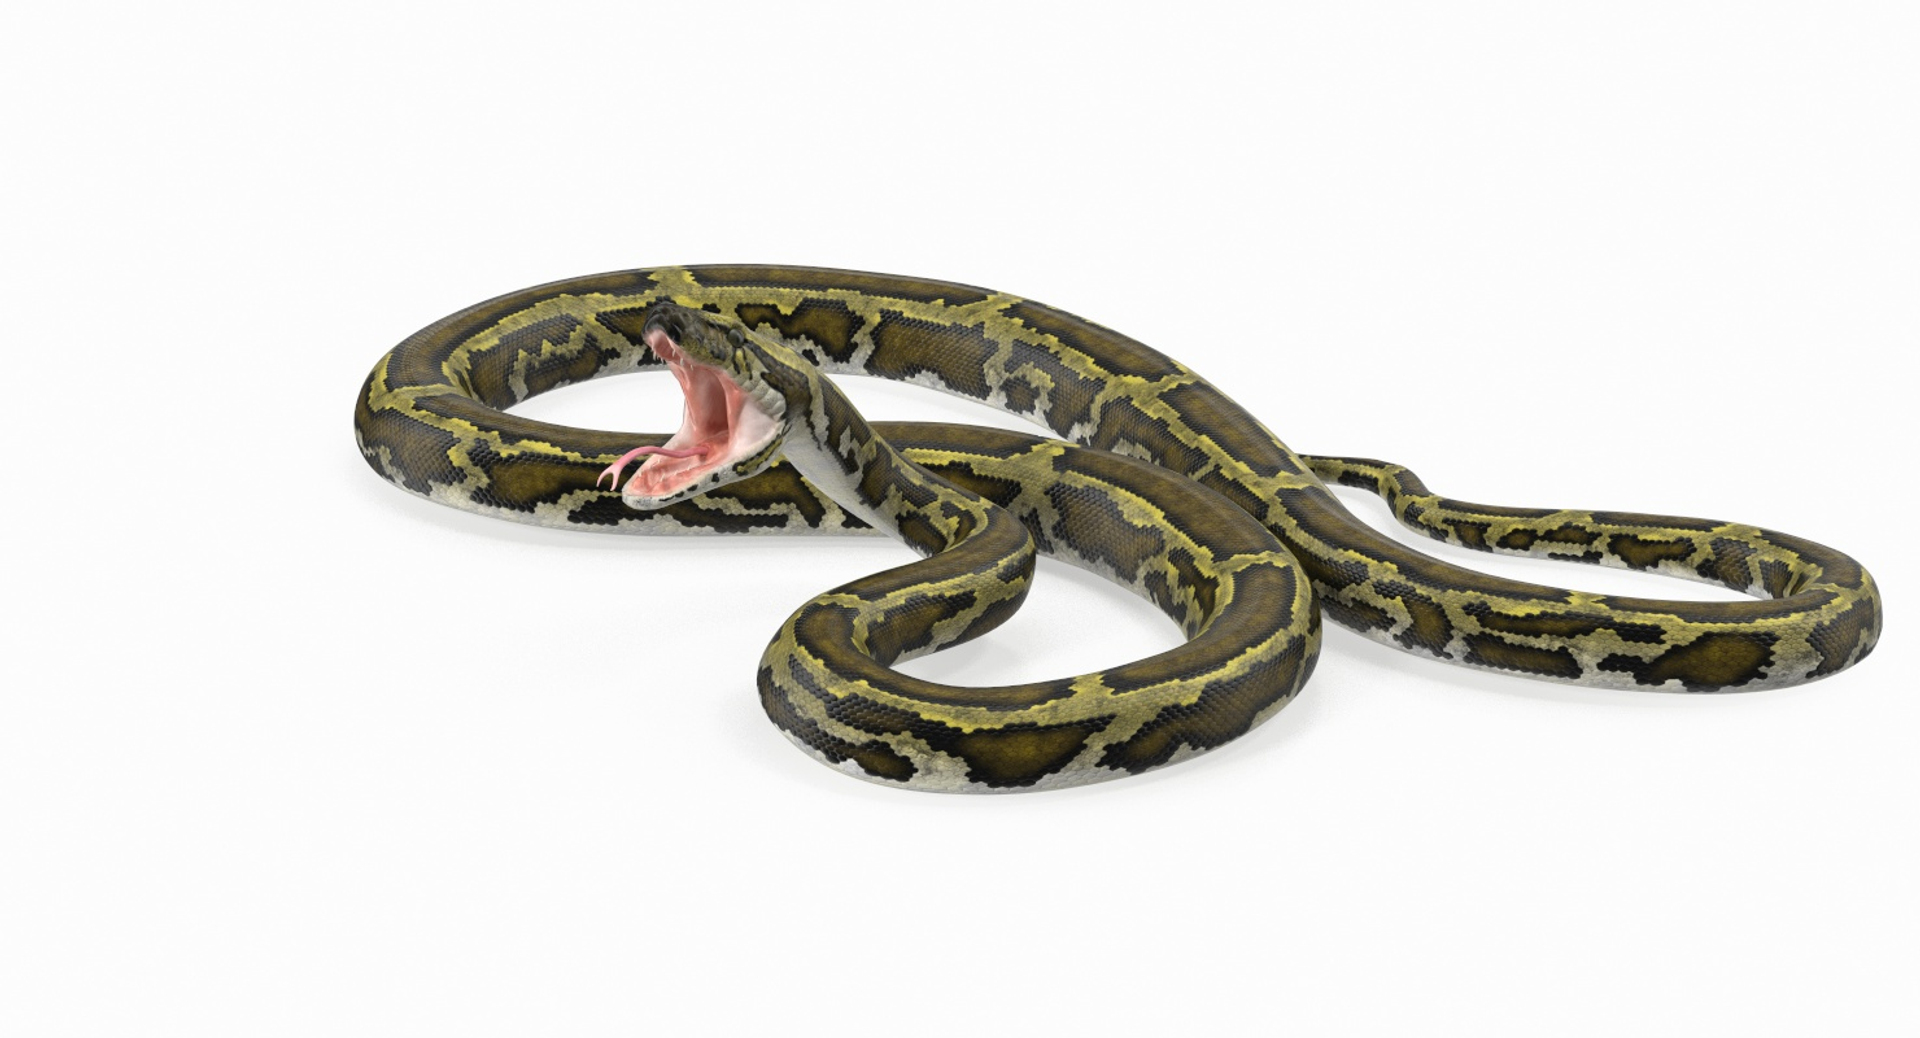 3D_Molier - 3D Yellow Python Snake Attack Pose  https://www.turbosquid.com/3d-models/3d-yellow-python-snake-attack-1412938?referral=3d_molier-International  | Facebook